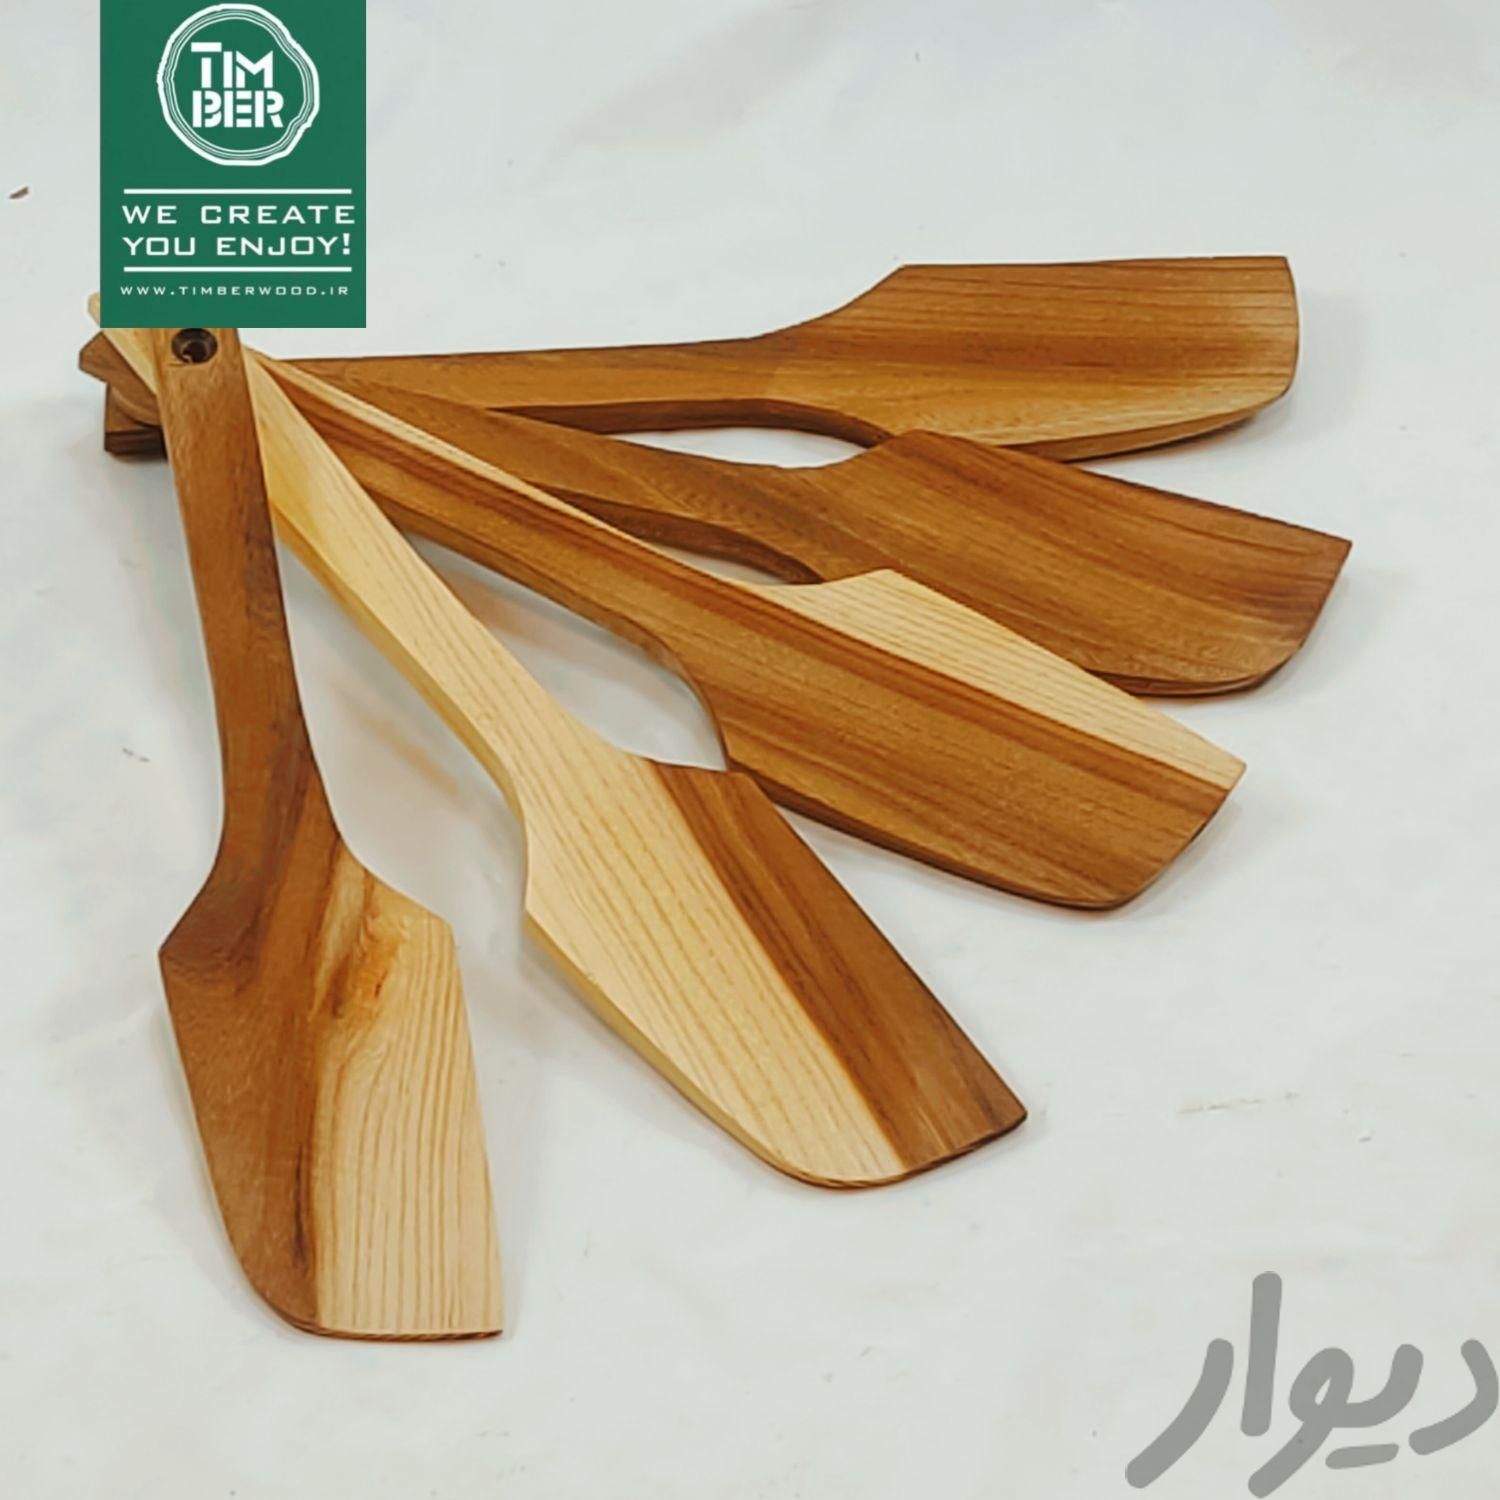 فروش عمده و قاشق و چنگال چوبی|ظروف پخت‌وپز|تهران, شوش|دیوار